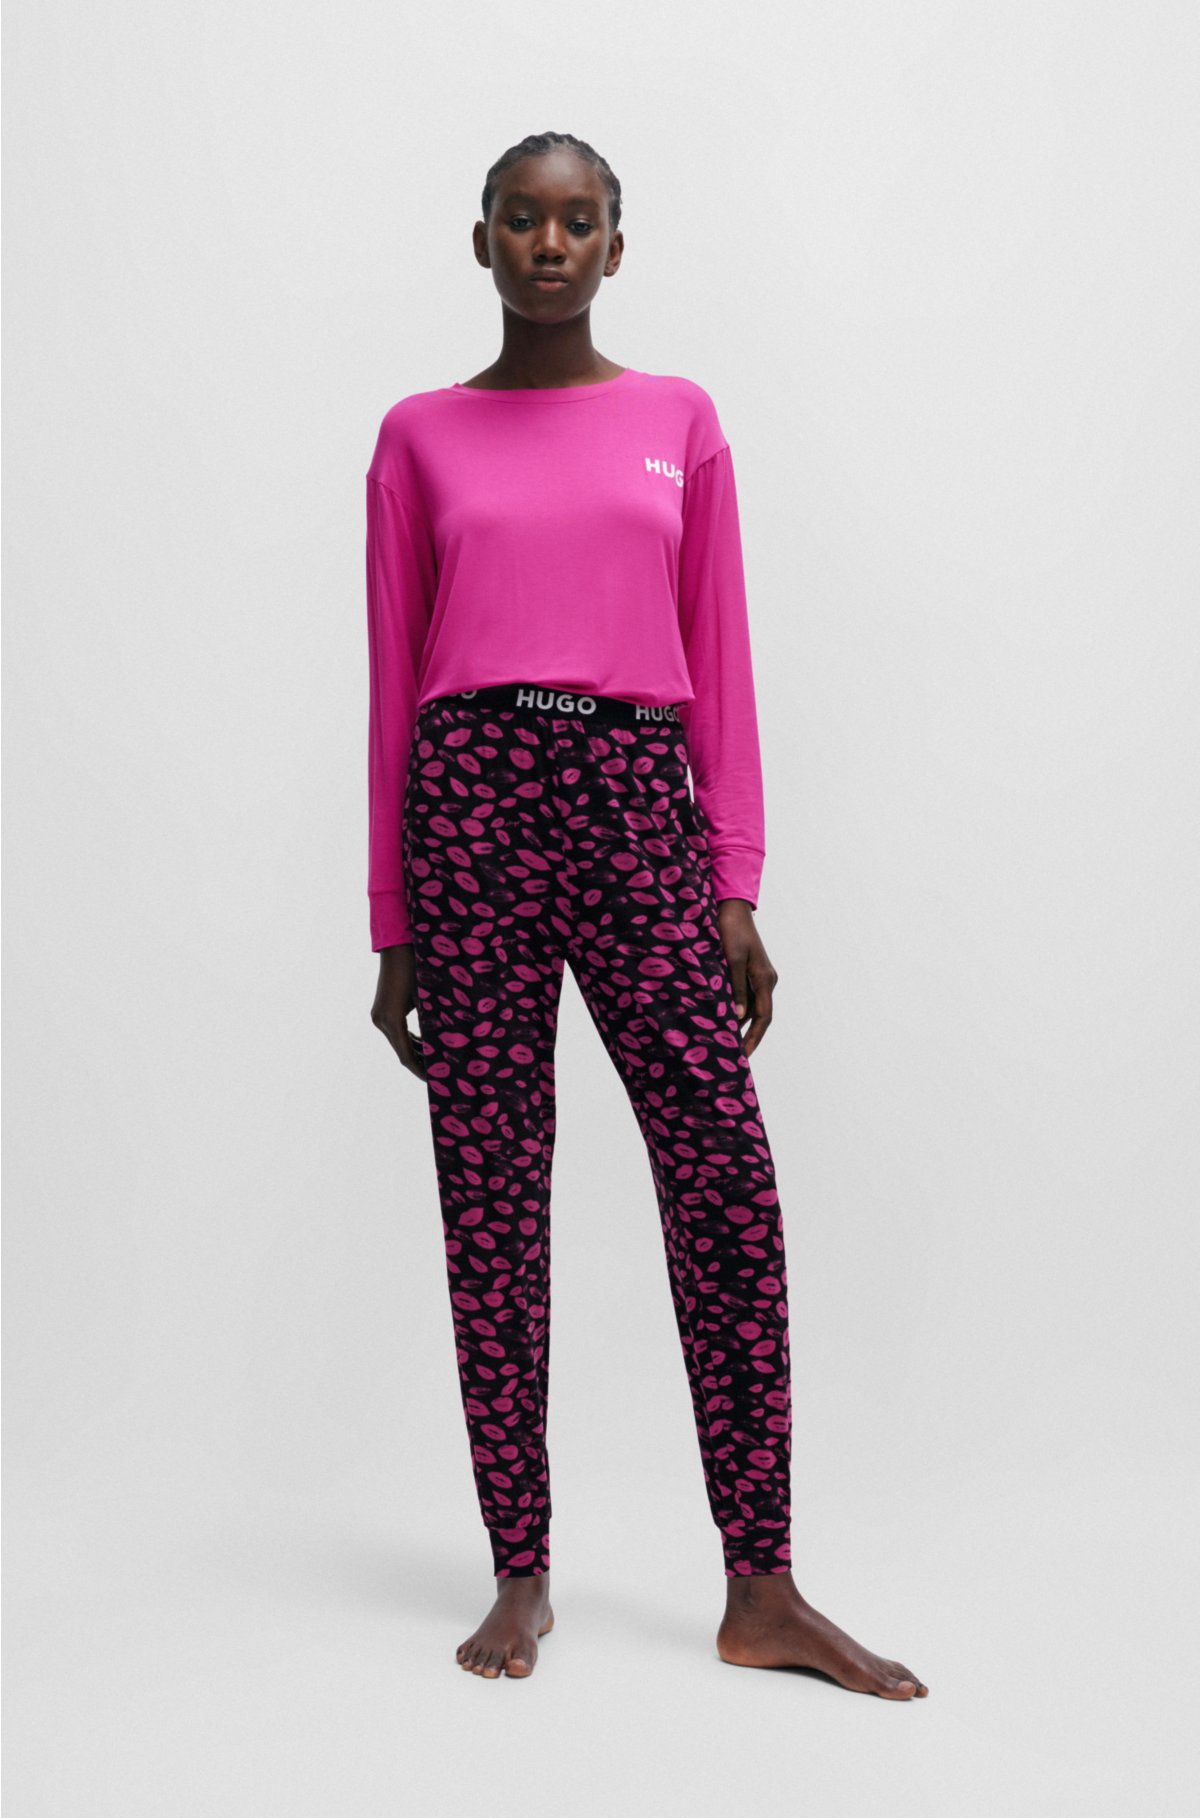 Cuffed pyjama bottoms with handwritten and original logos, Black / Pink